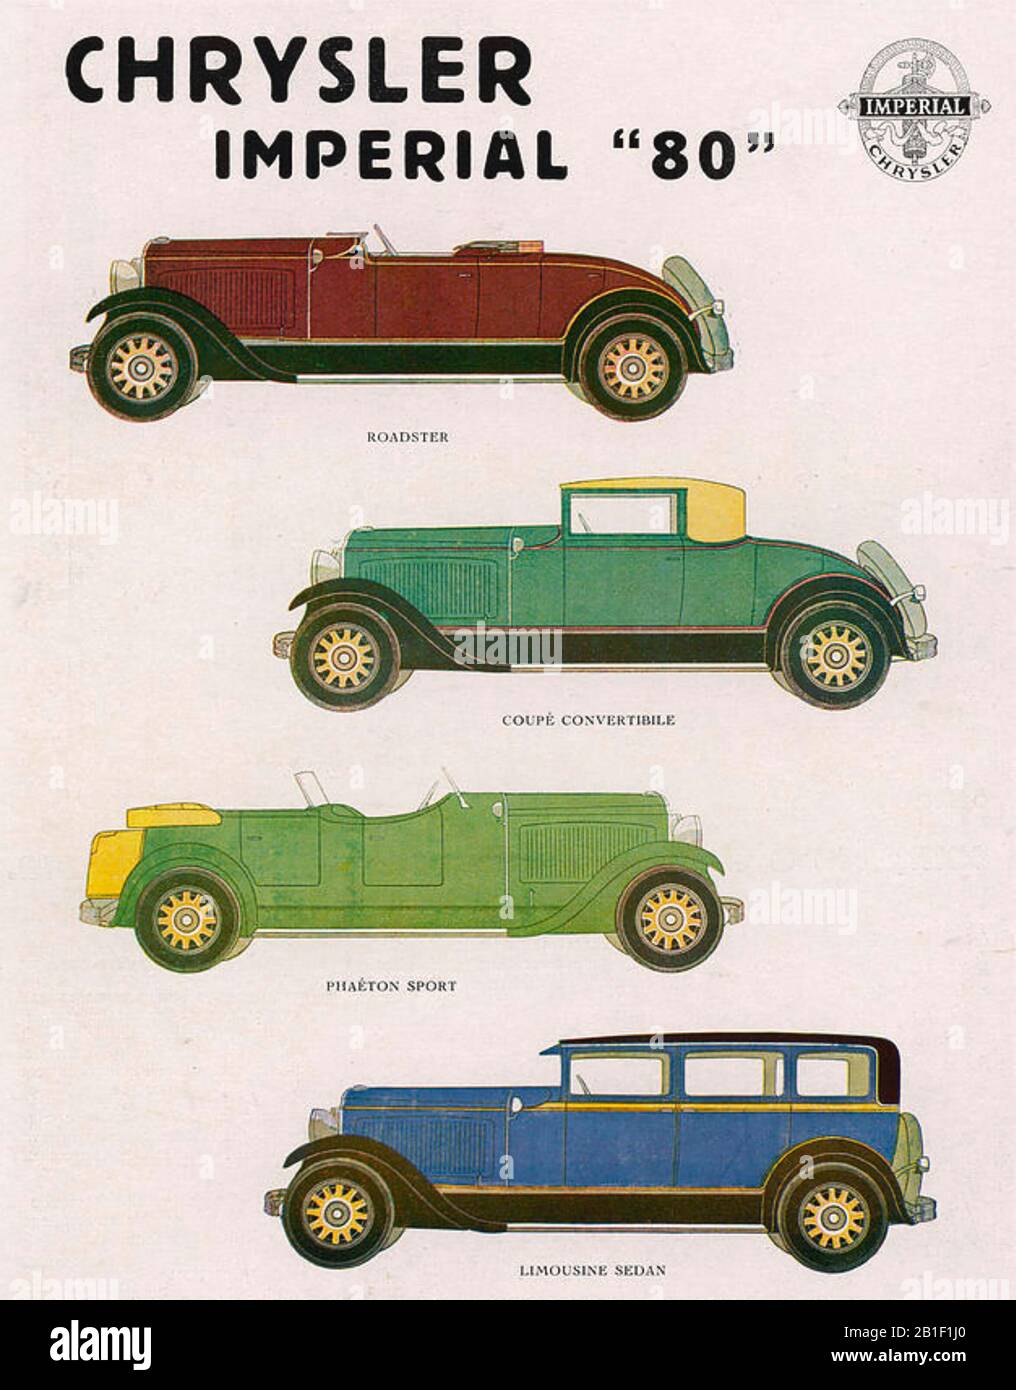 Chrysler IMPERIAL 80- vetture in un poster del 1929, Foto Stock